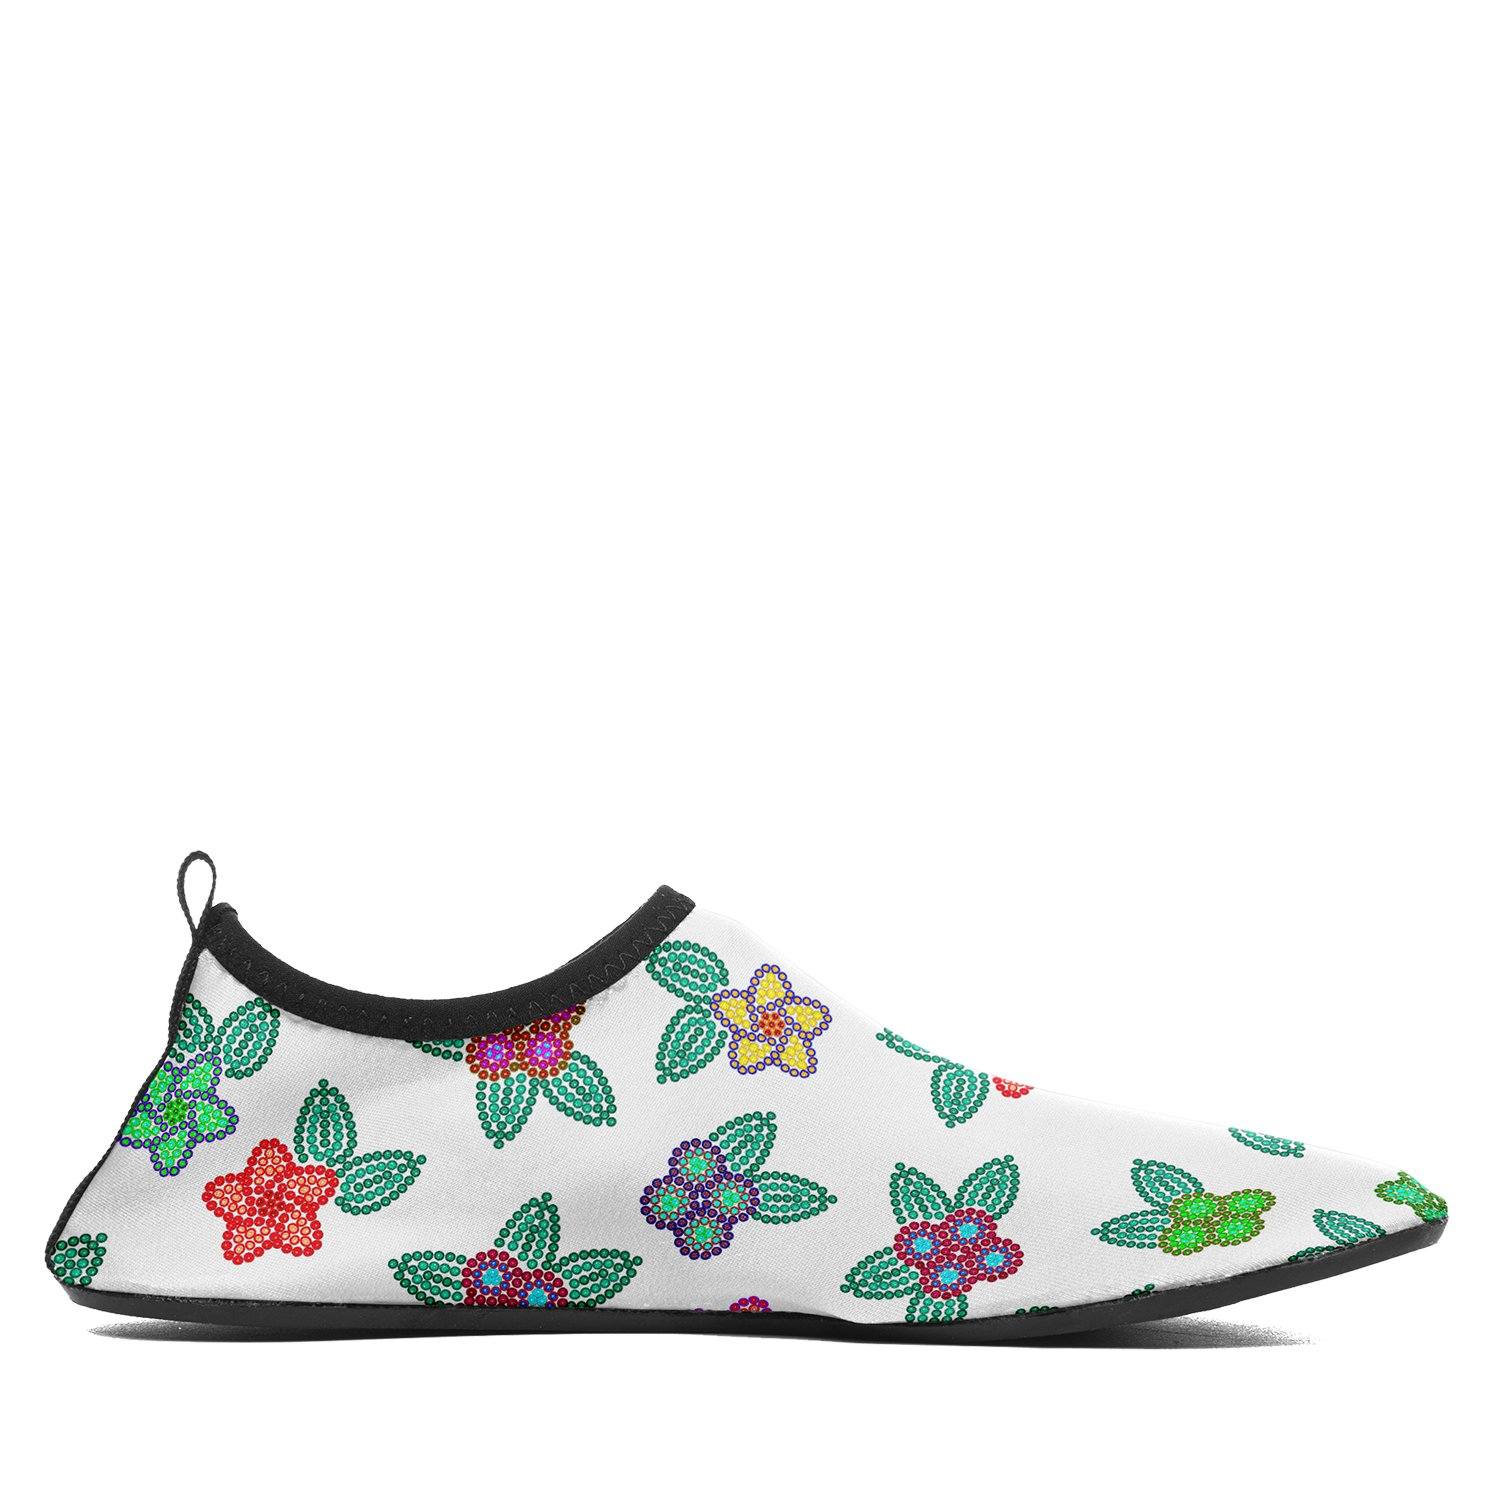 Berry Flowers White Sockamoccs Kid's Slip On Shoes Herman 